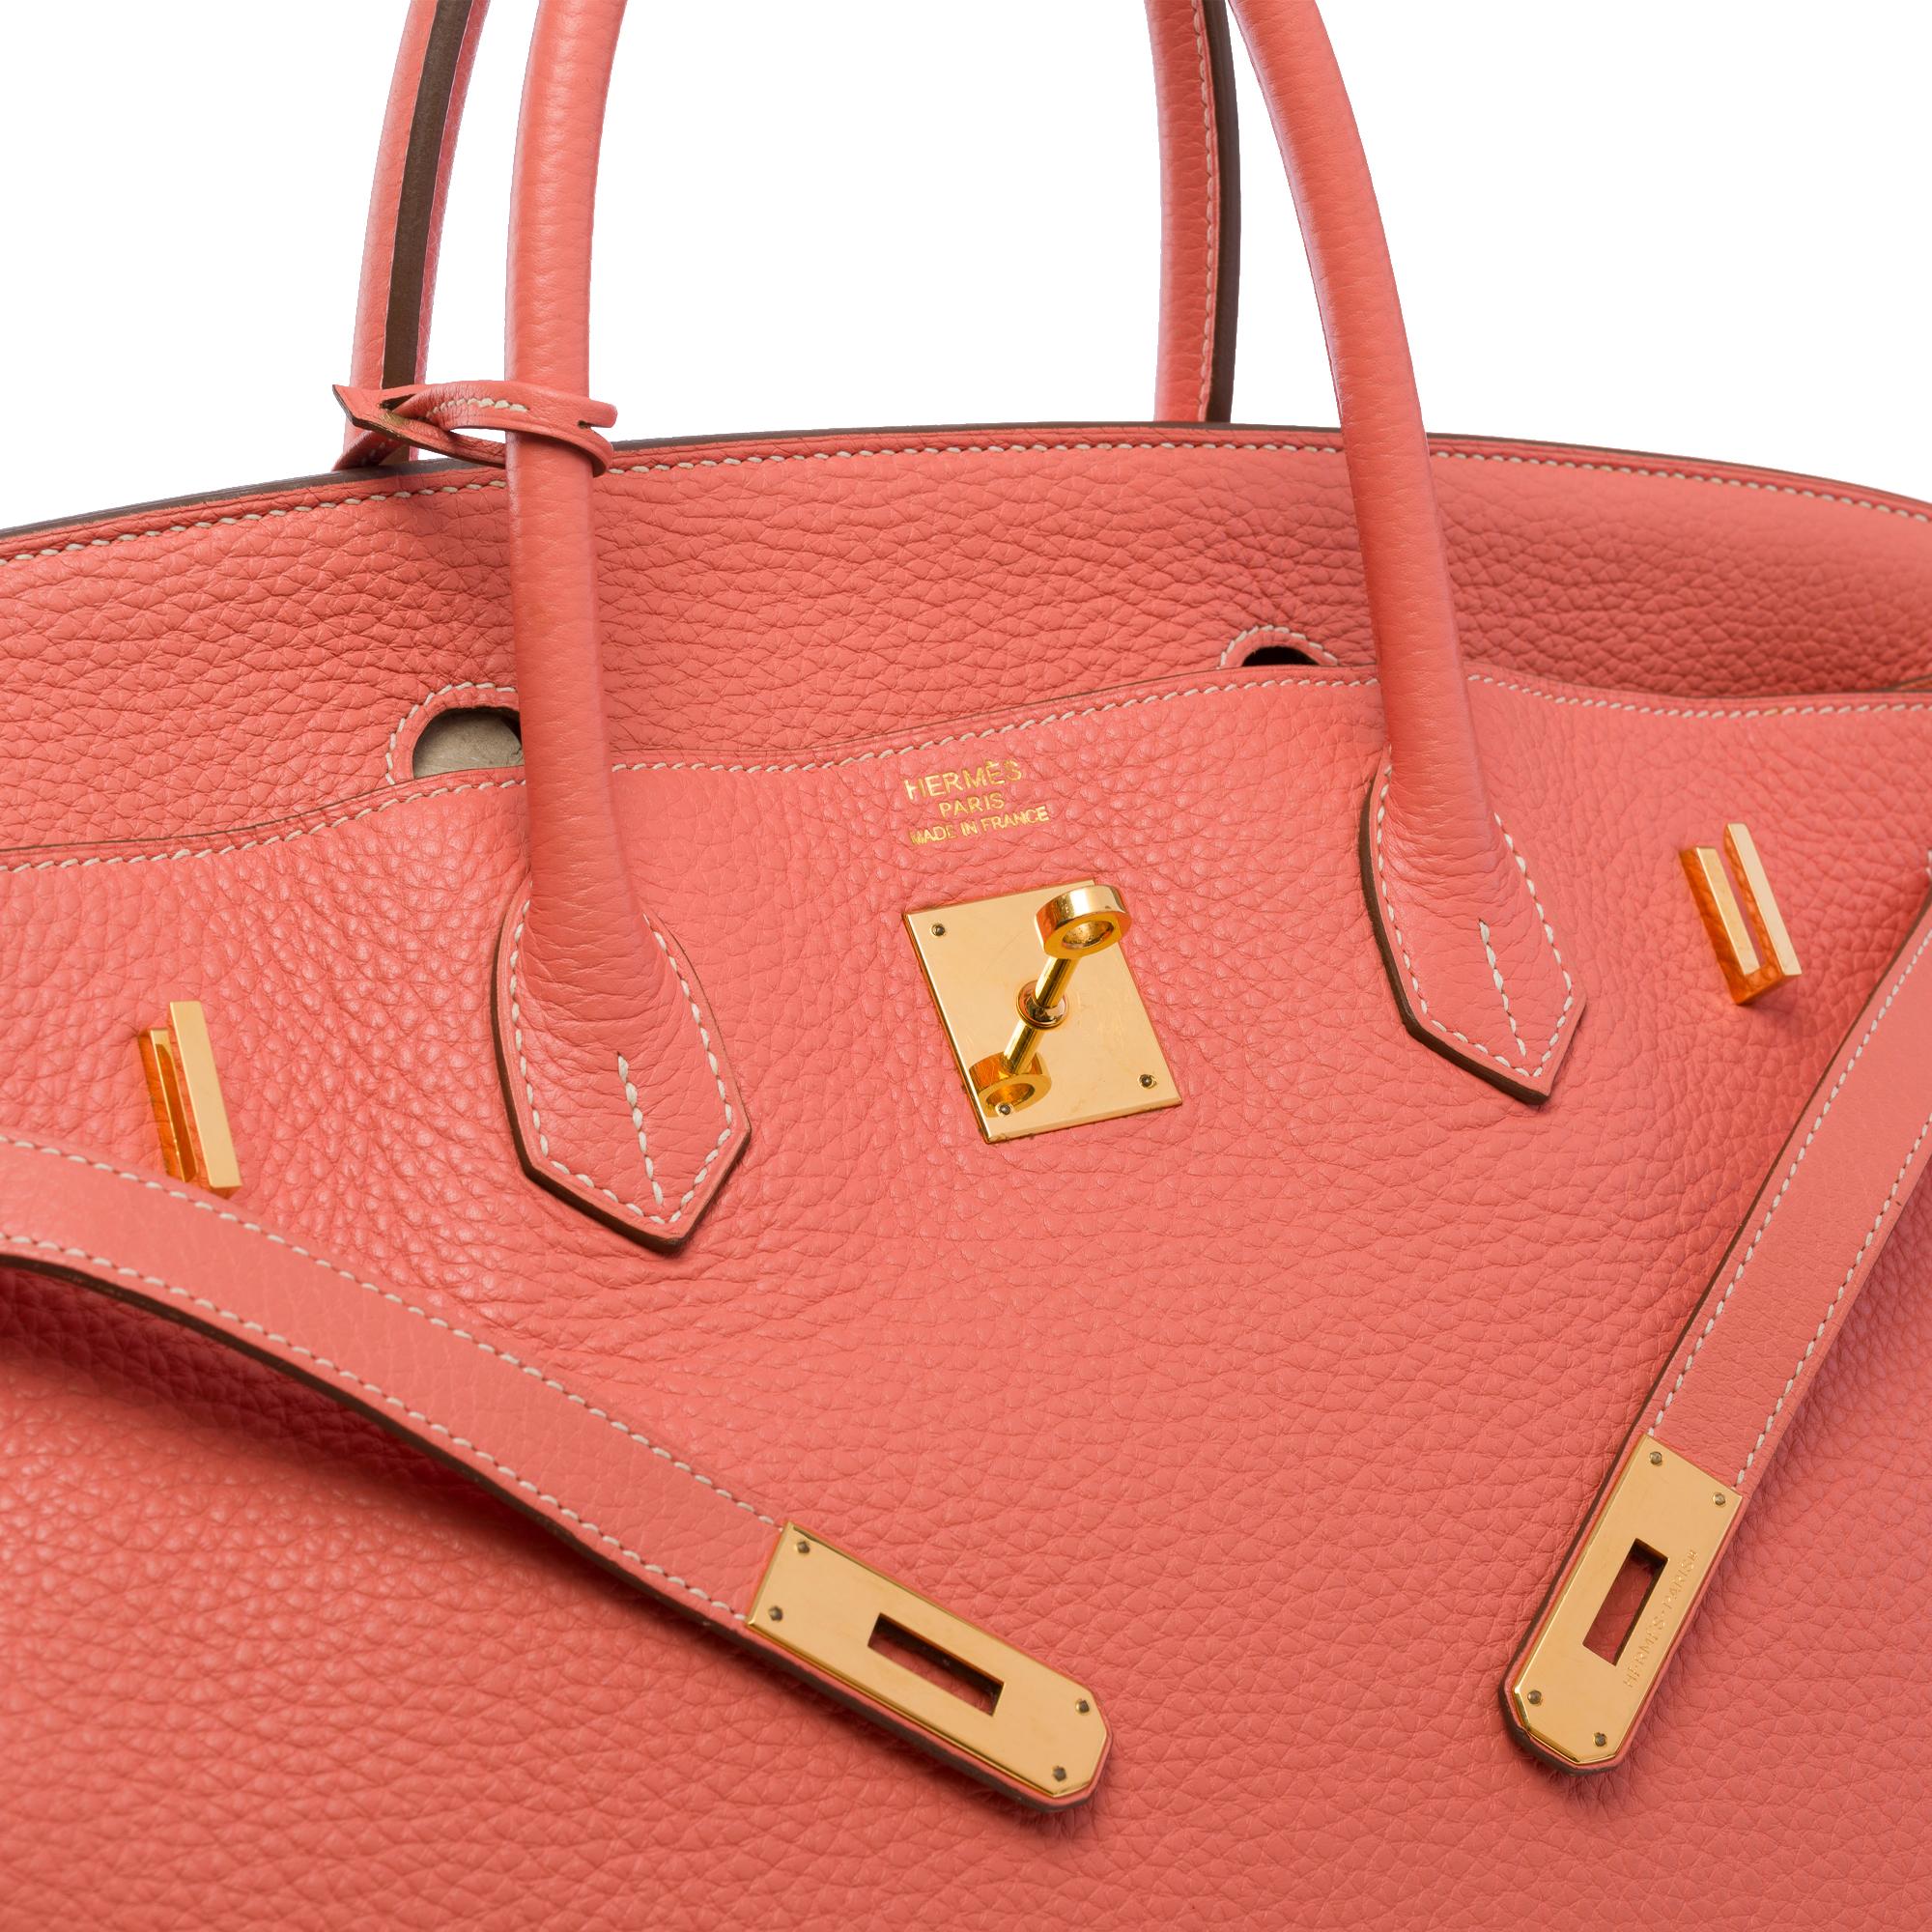 Women's or Men's Stunning Hermes Birkin 40cm handbag in Rose Tea Togo leather, GHW For Sale